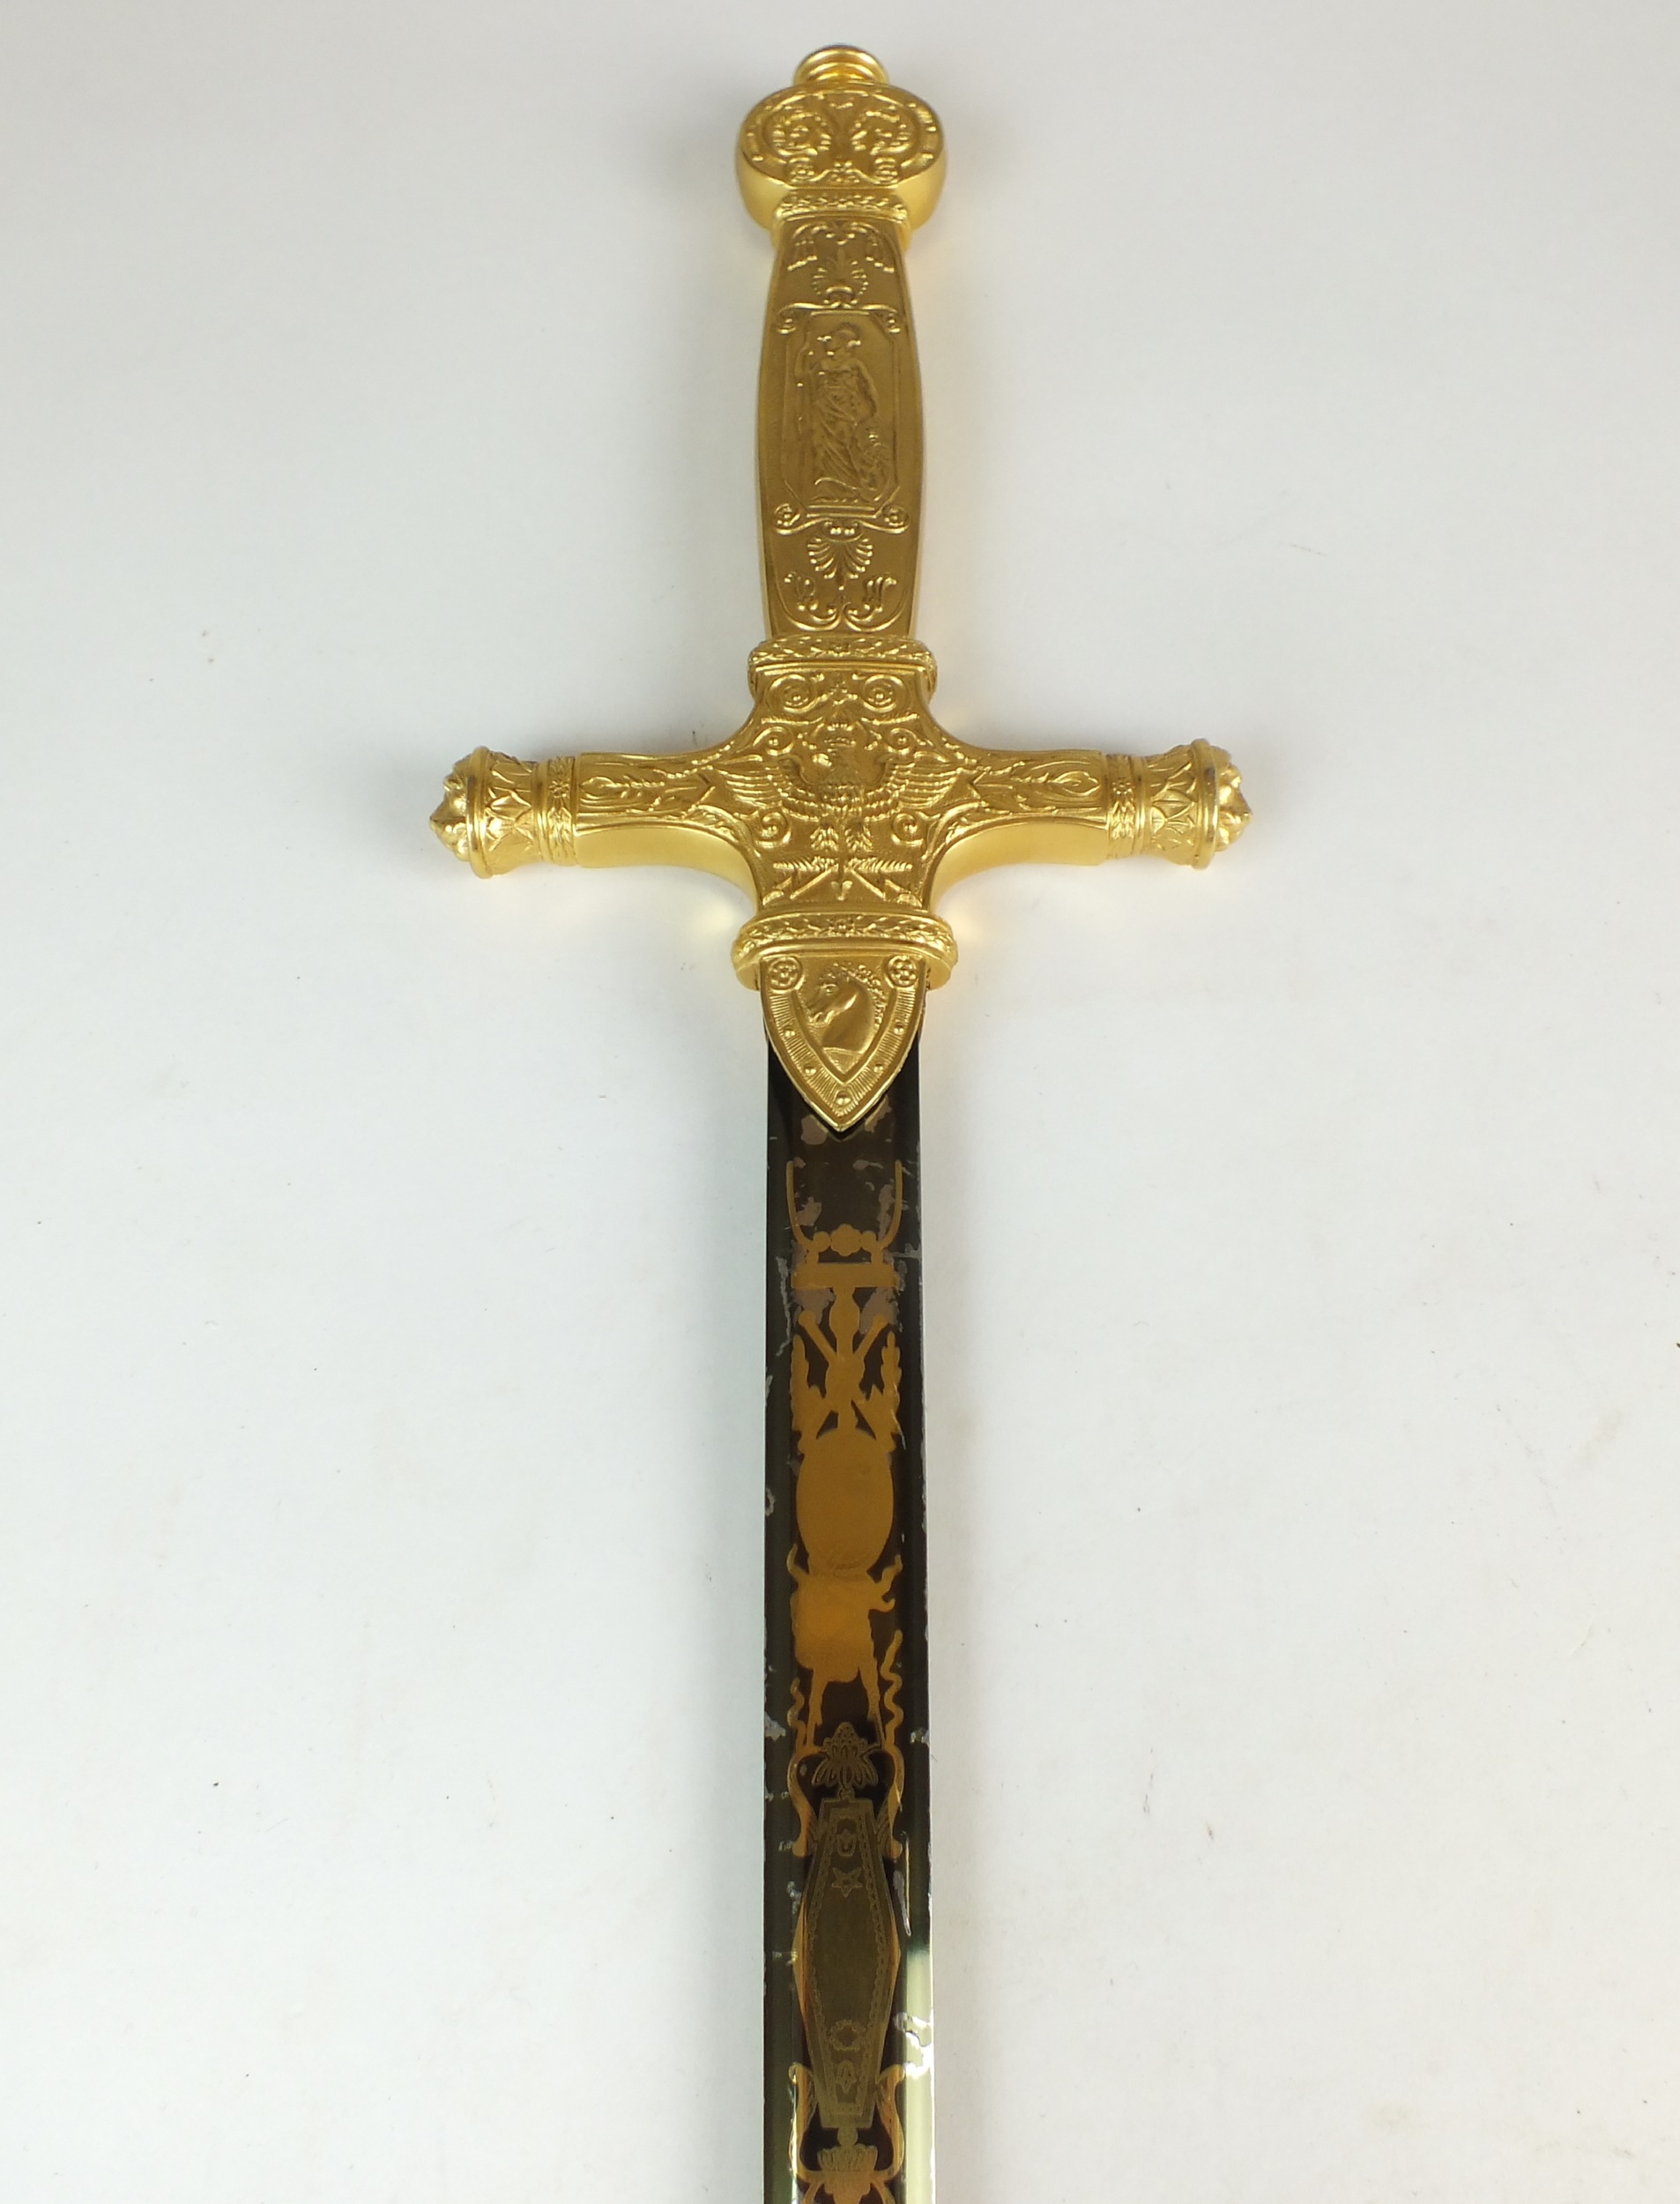 Late 20th-century display sword